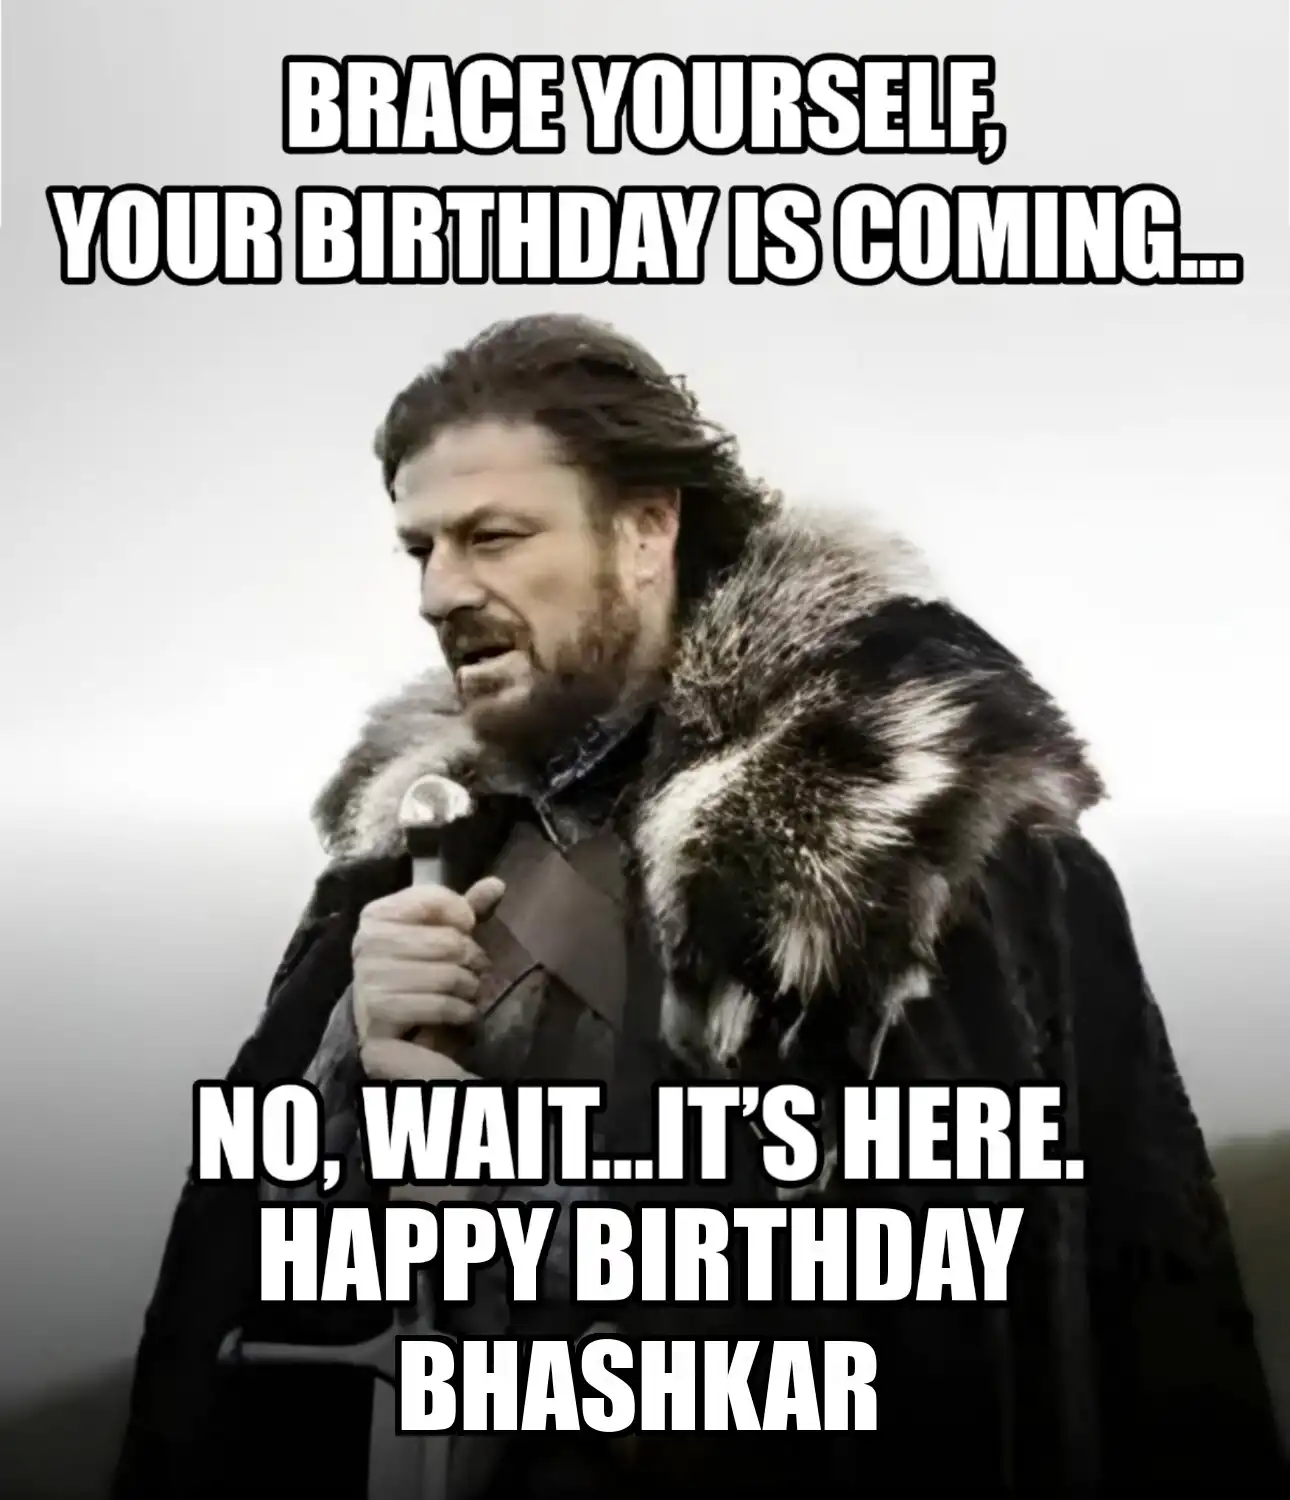 Happy Birthday Bhashkar Brace Yourself Your Birthday Is Coming Meme